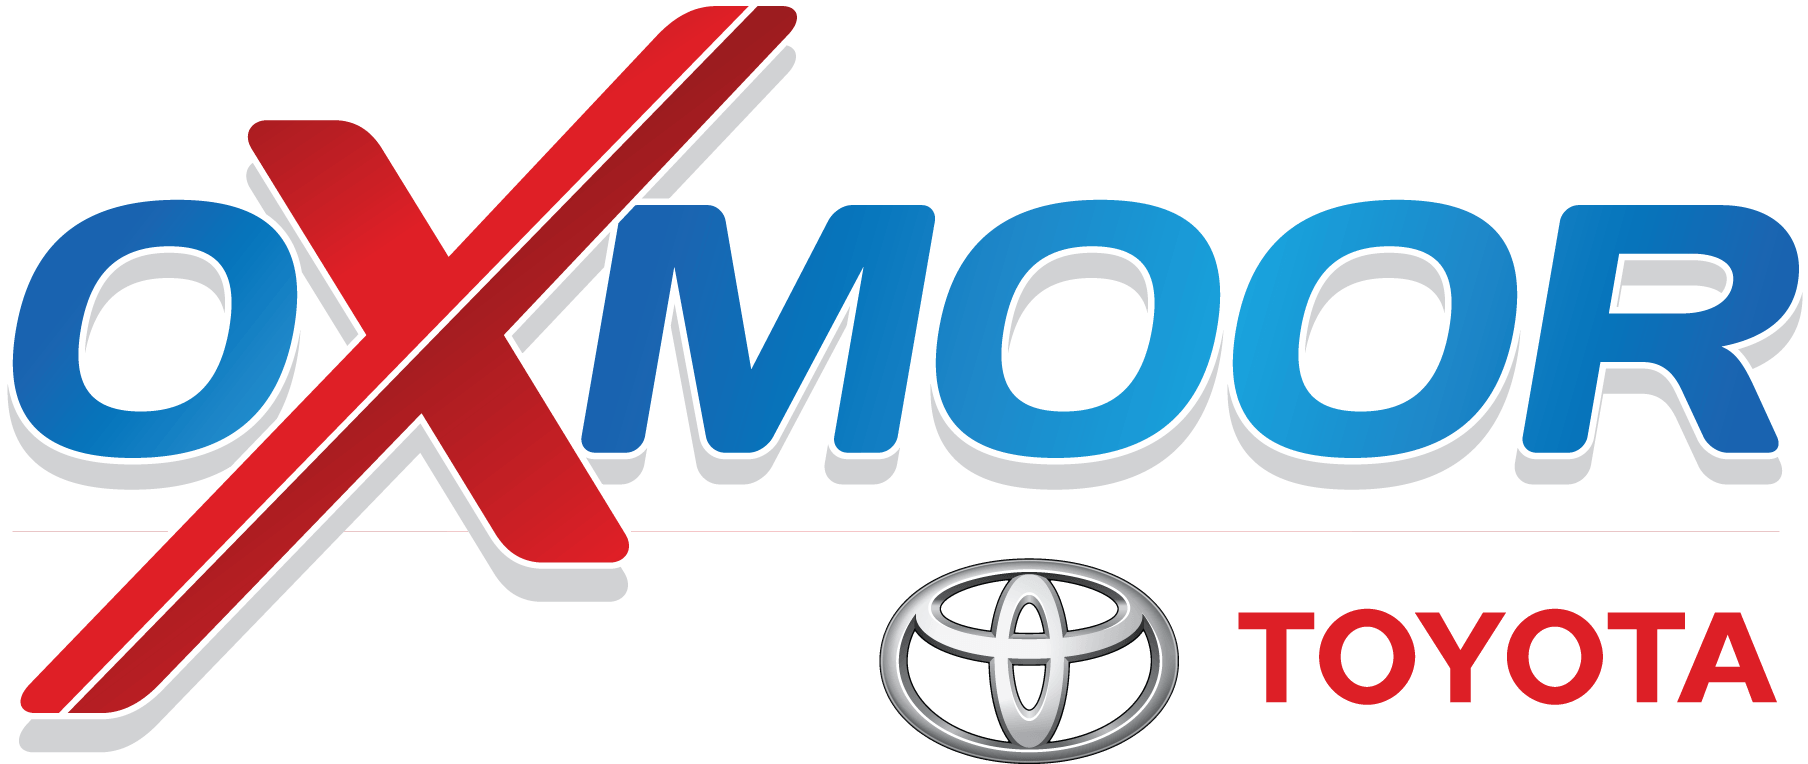 Toyota Kentucky Logo - Toyota Camry vs. Toyota Corolla | Oxmoor Toyota